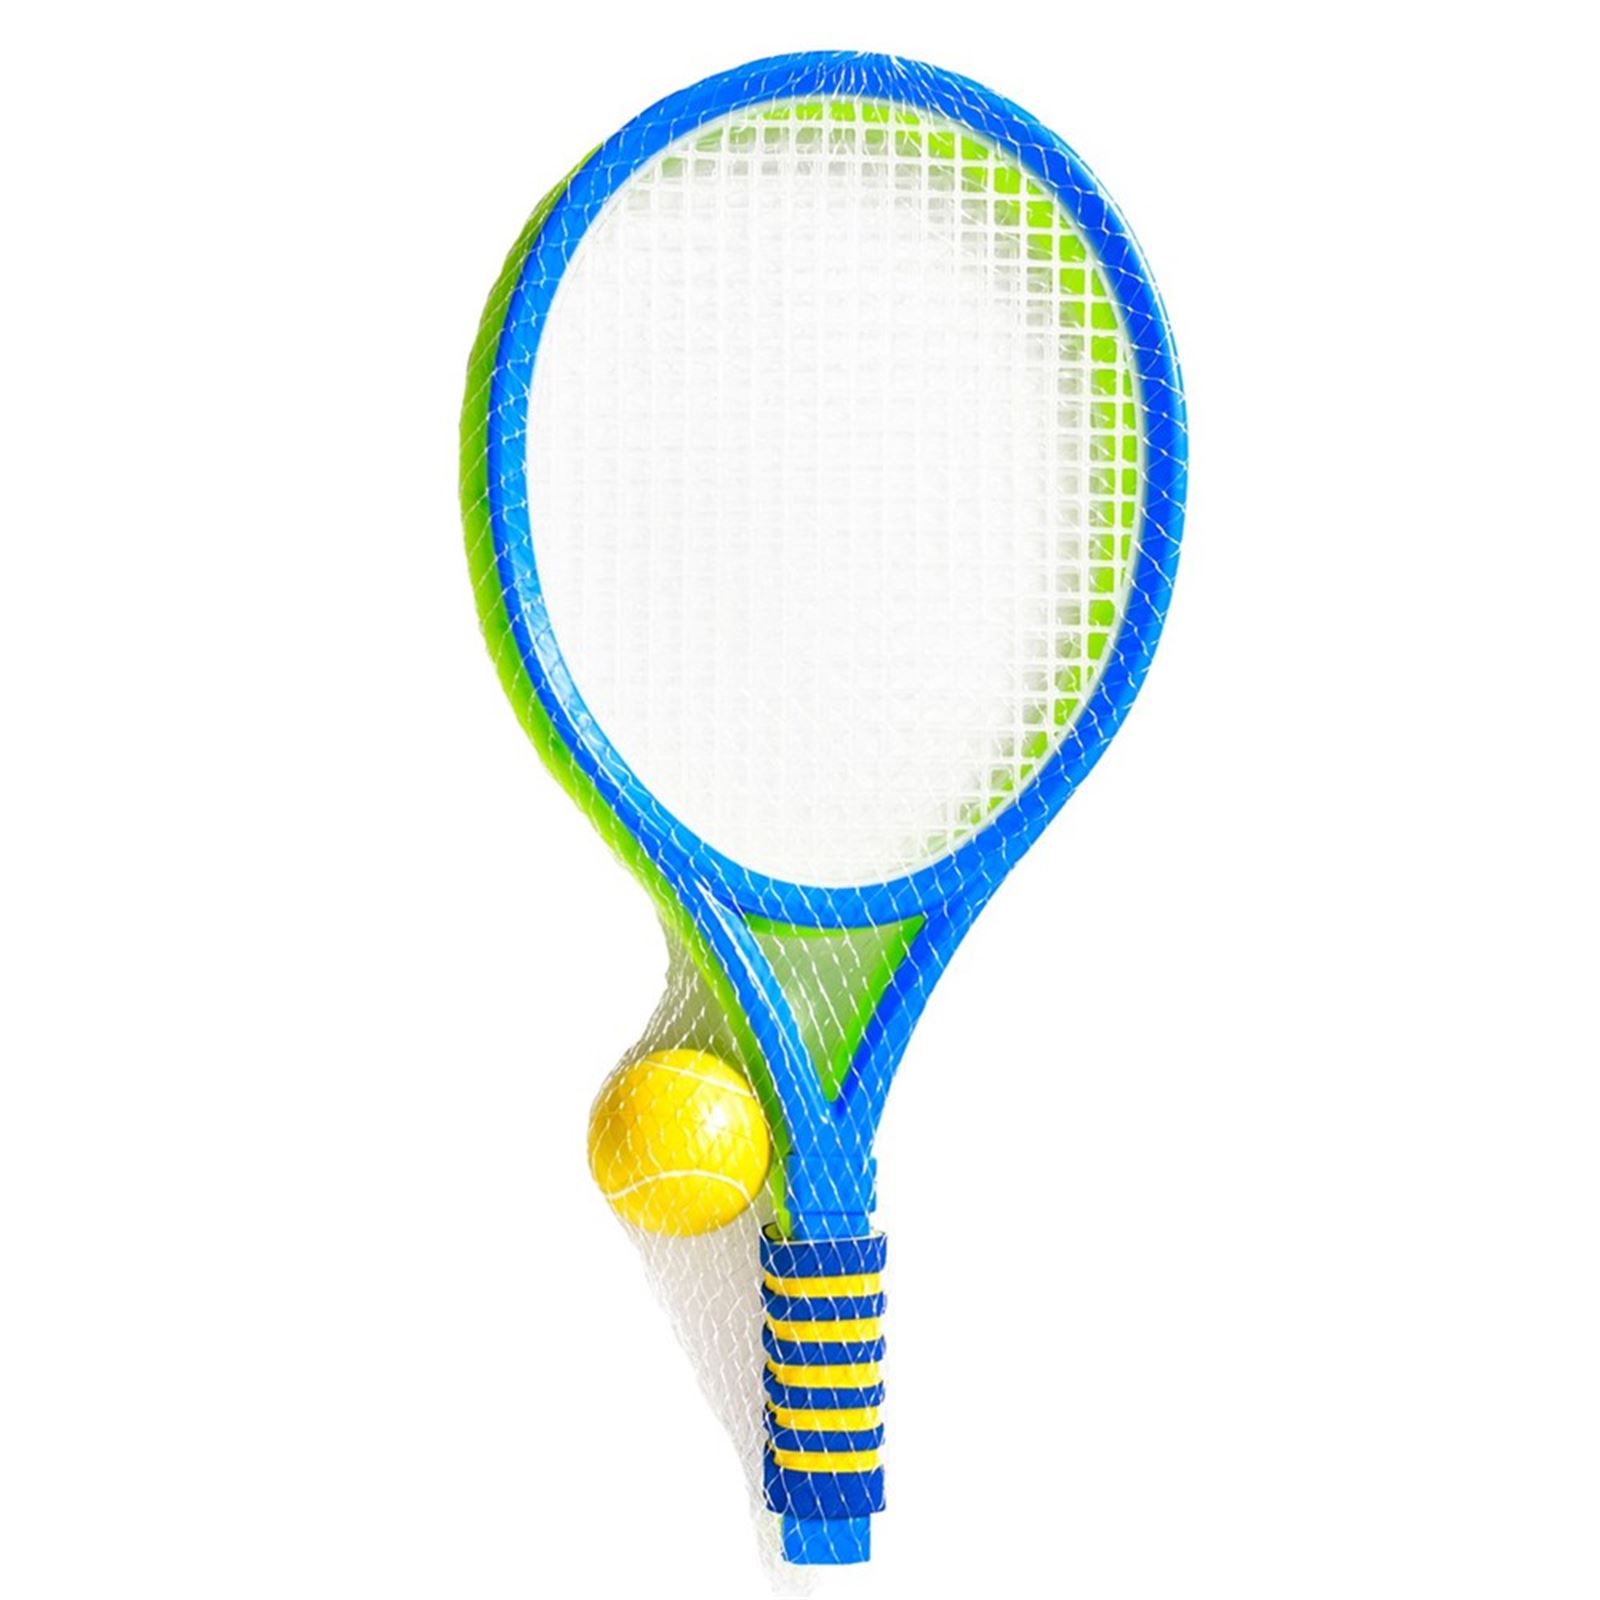 Tenis Raketi Seti Mavi-Yeşil 